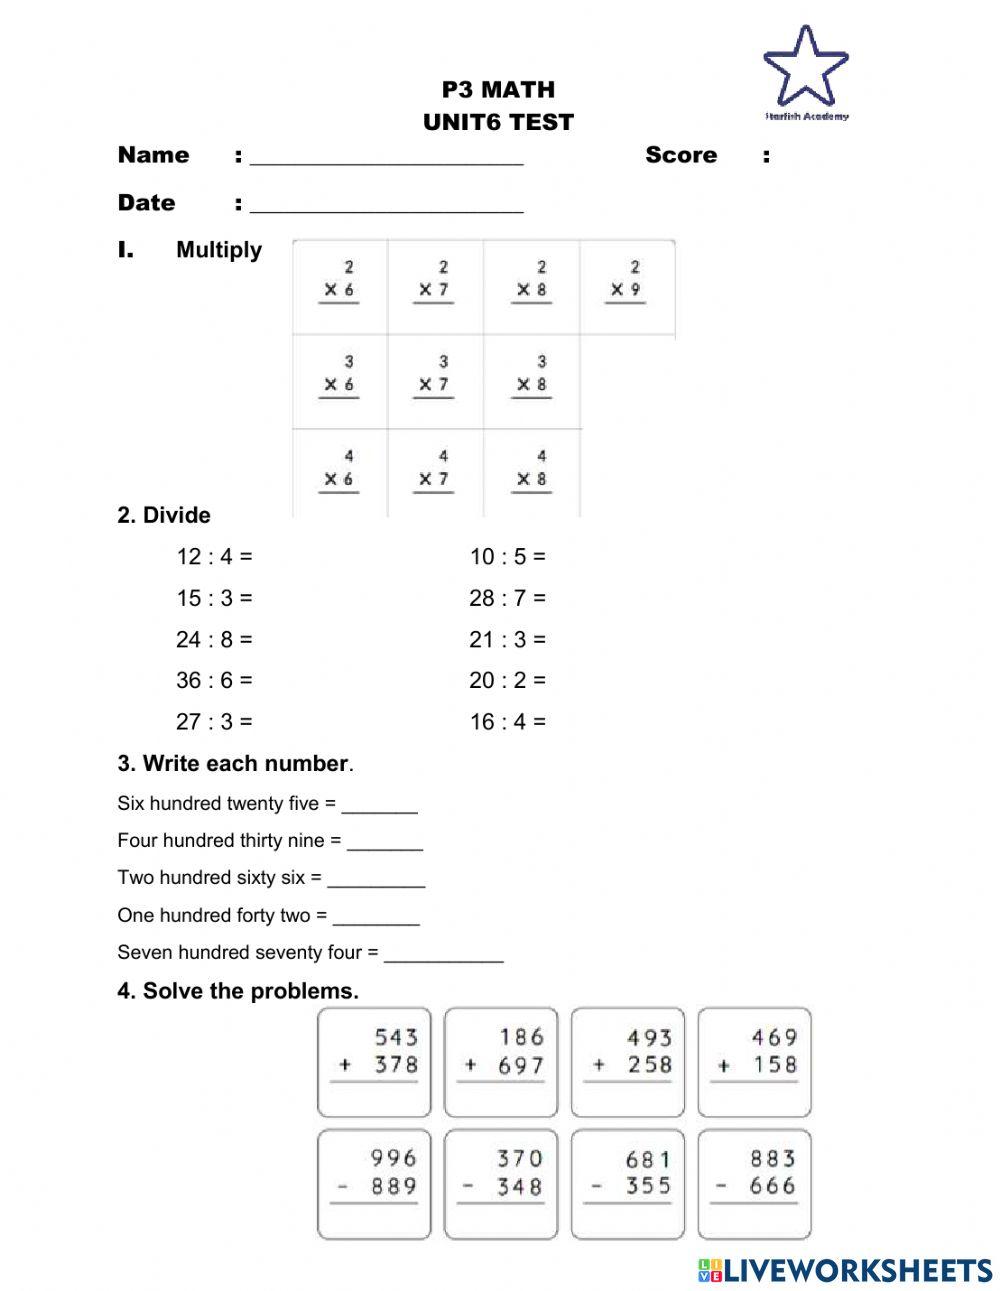 P3 unit 6 test add, multiply, divide